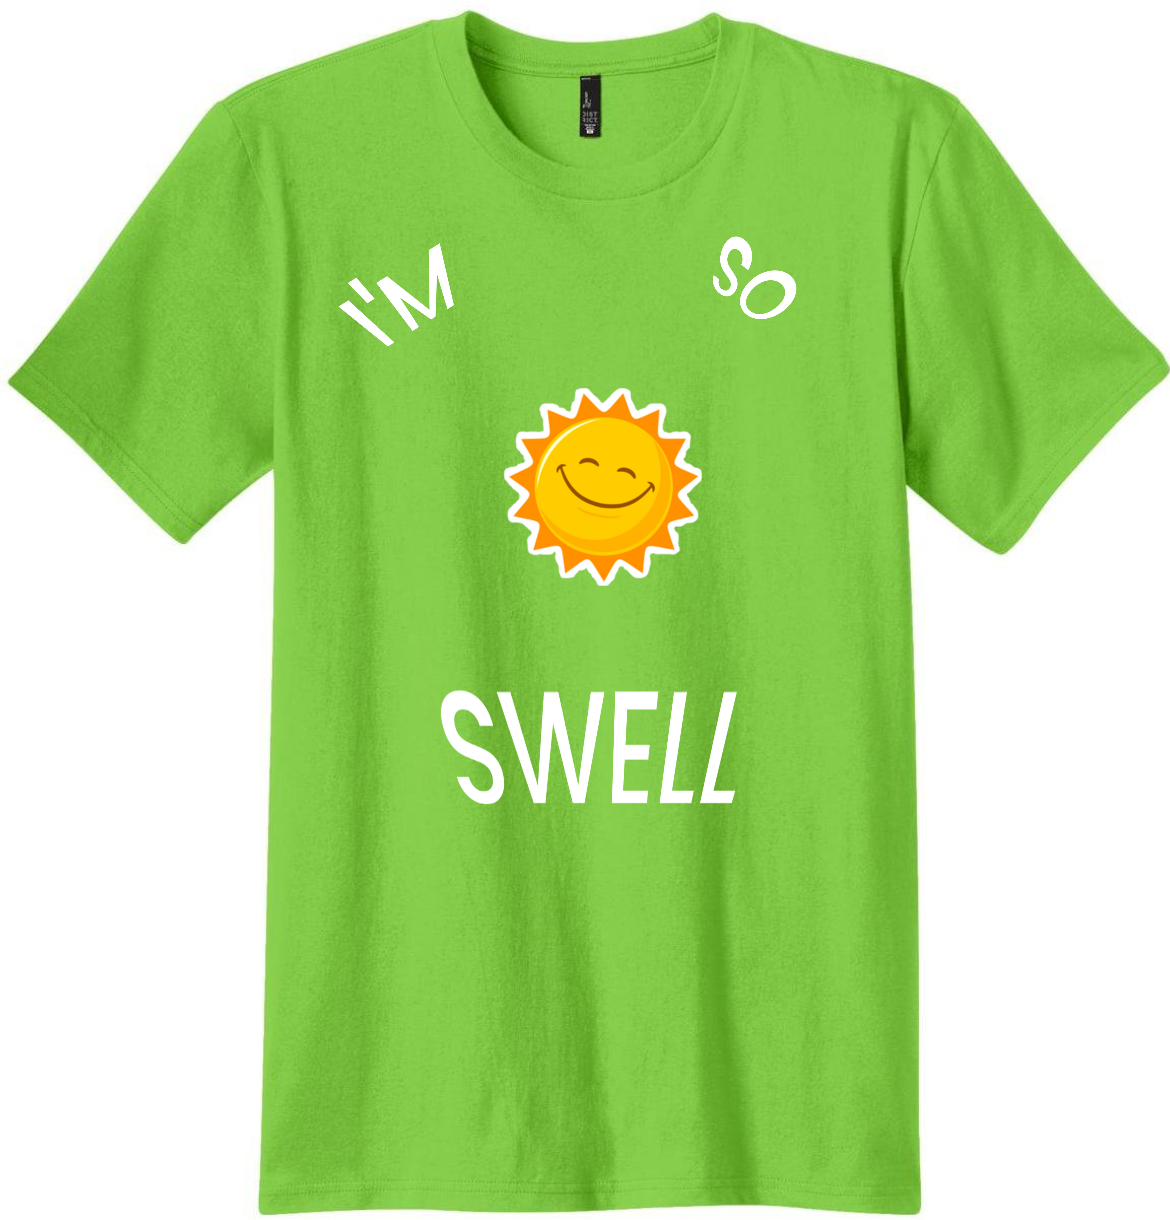 Sunny swell